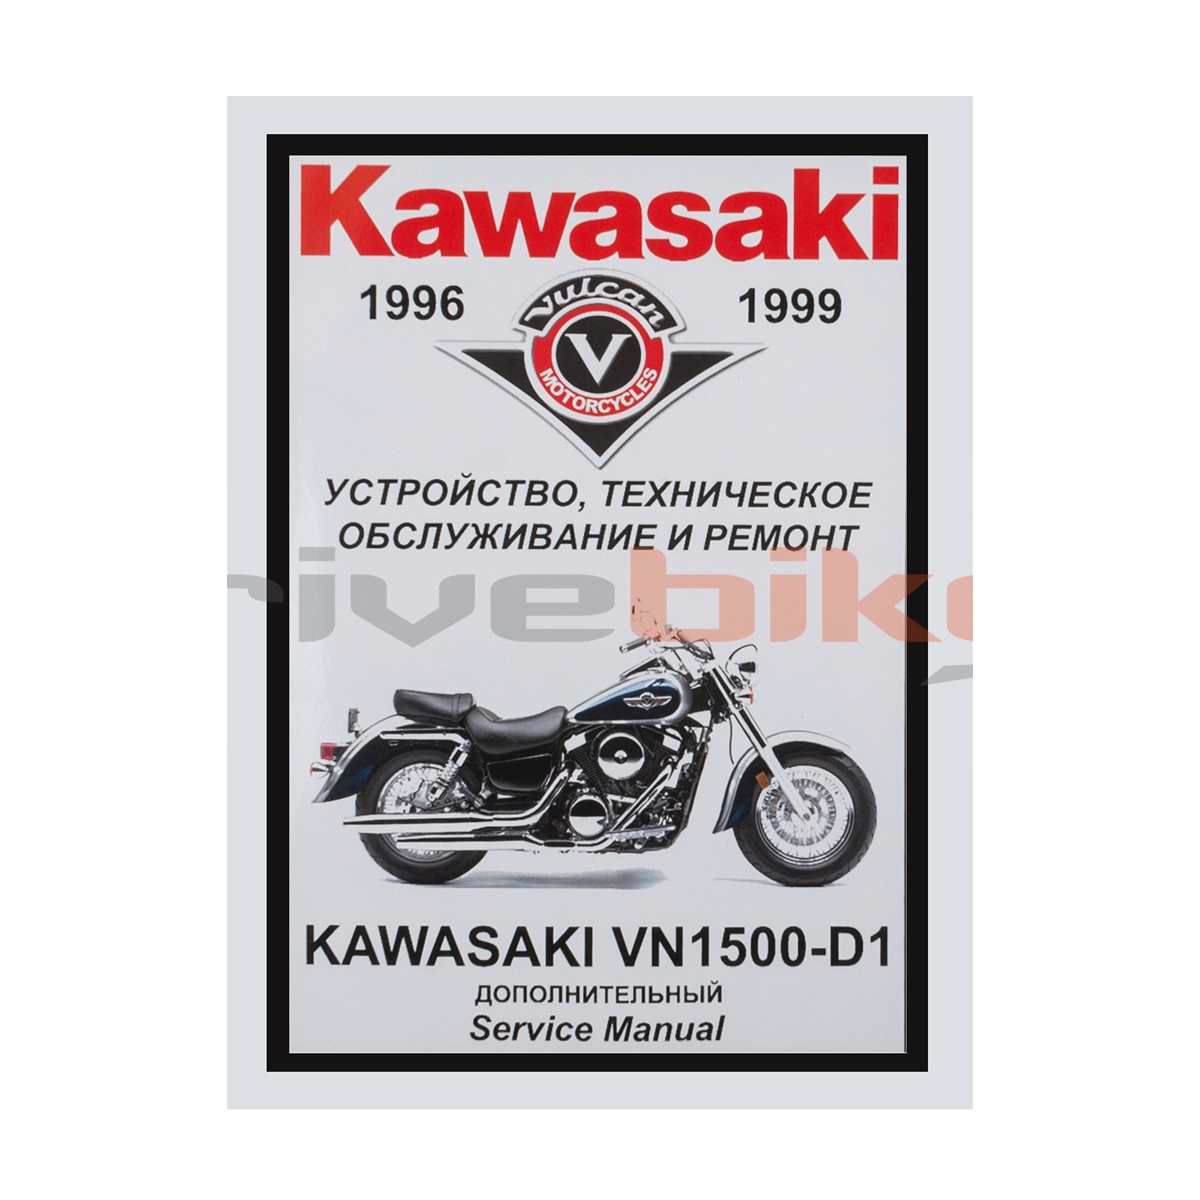 Kawasaki vn 1700 vulcan — мощный и управляемый!